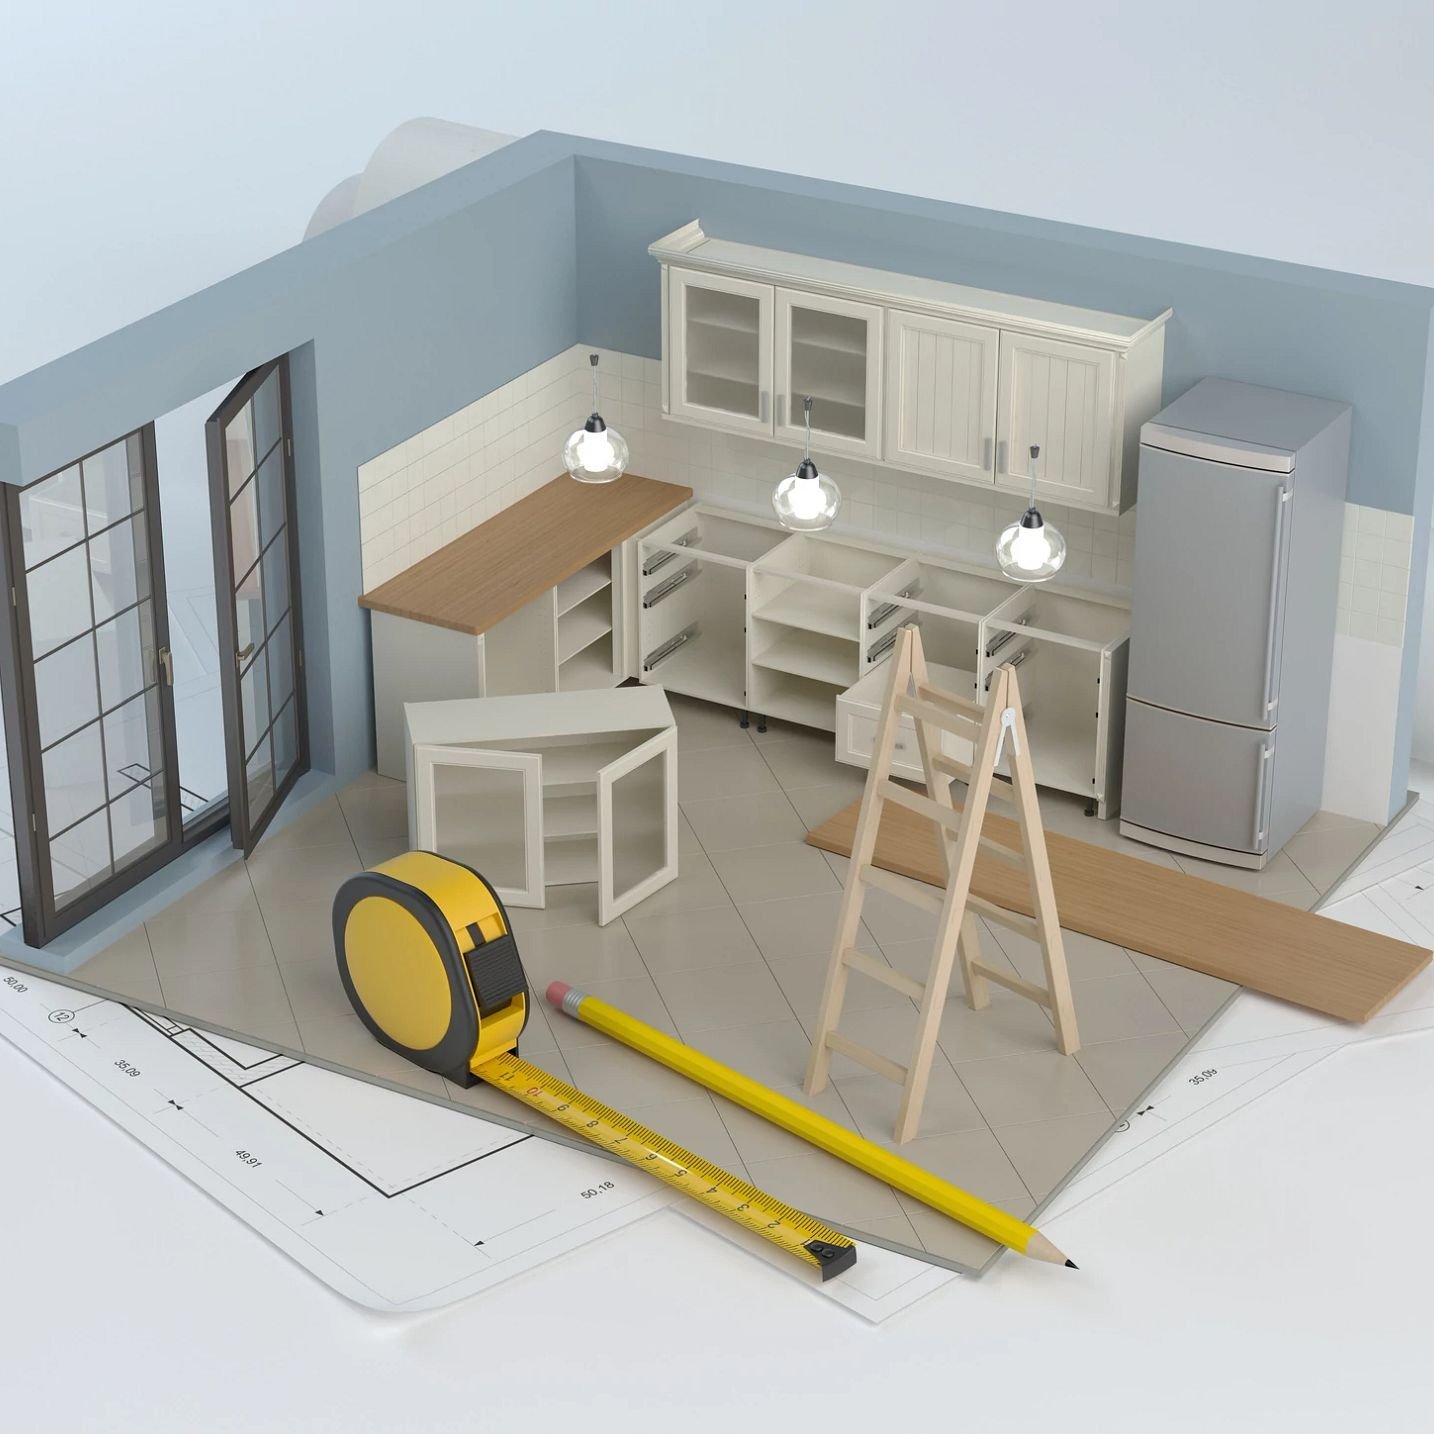 Diorama model of kitchen under construction - Carpet World of Martinsburg in WV